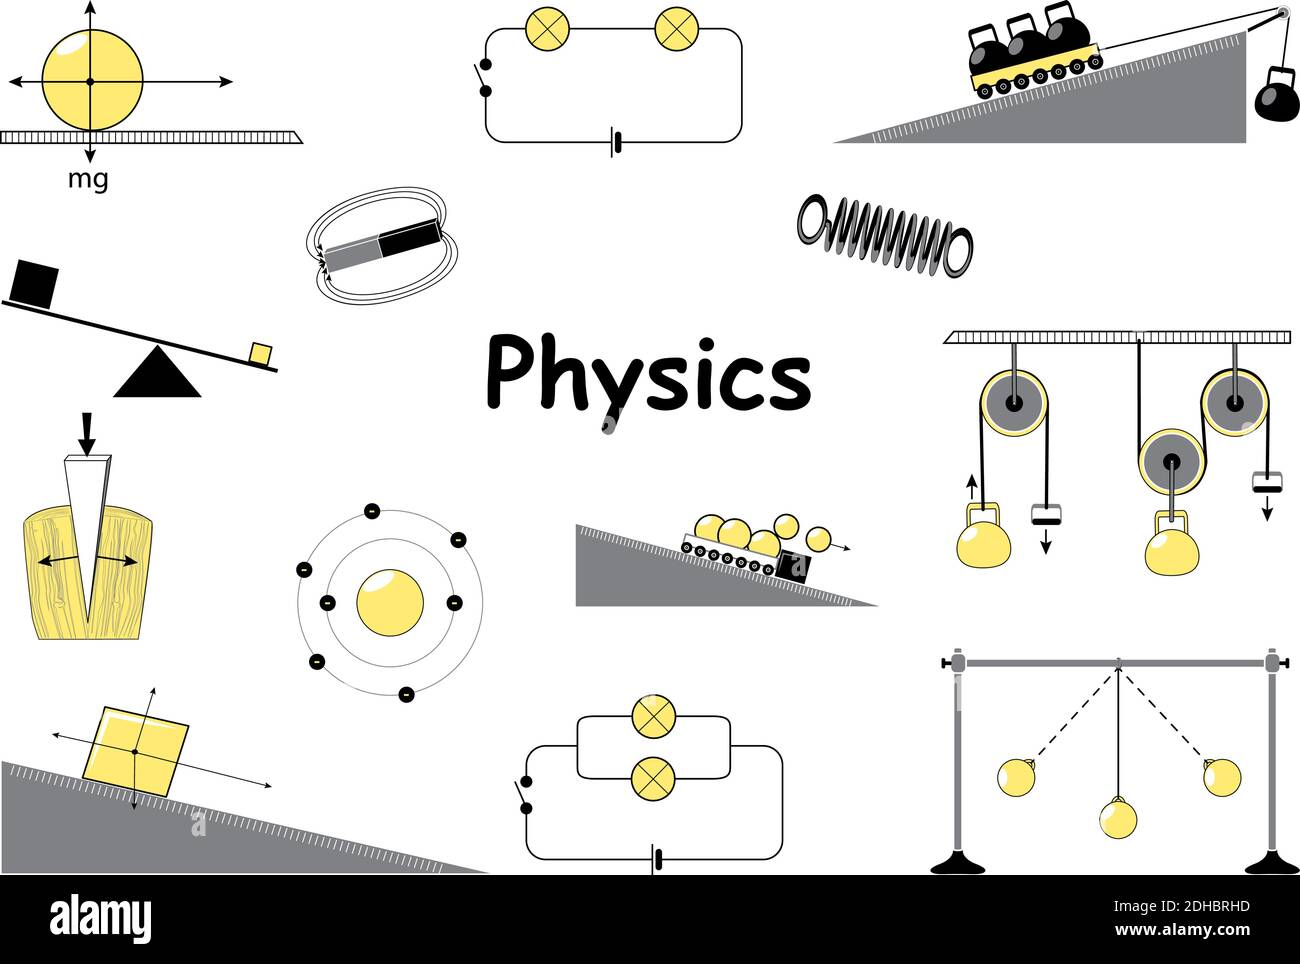 https://c8.alamy.com/comp/2DHBRHD/physics-and-science-icons-set-classical-mechanics-experiments-equipment-tools-magnet-atom-pendulum-newtons-laws-and-the-simplest-mechanisms-2DHBRHD.jpg